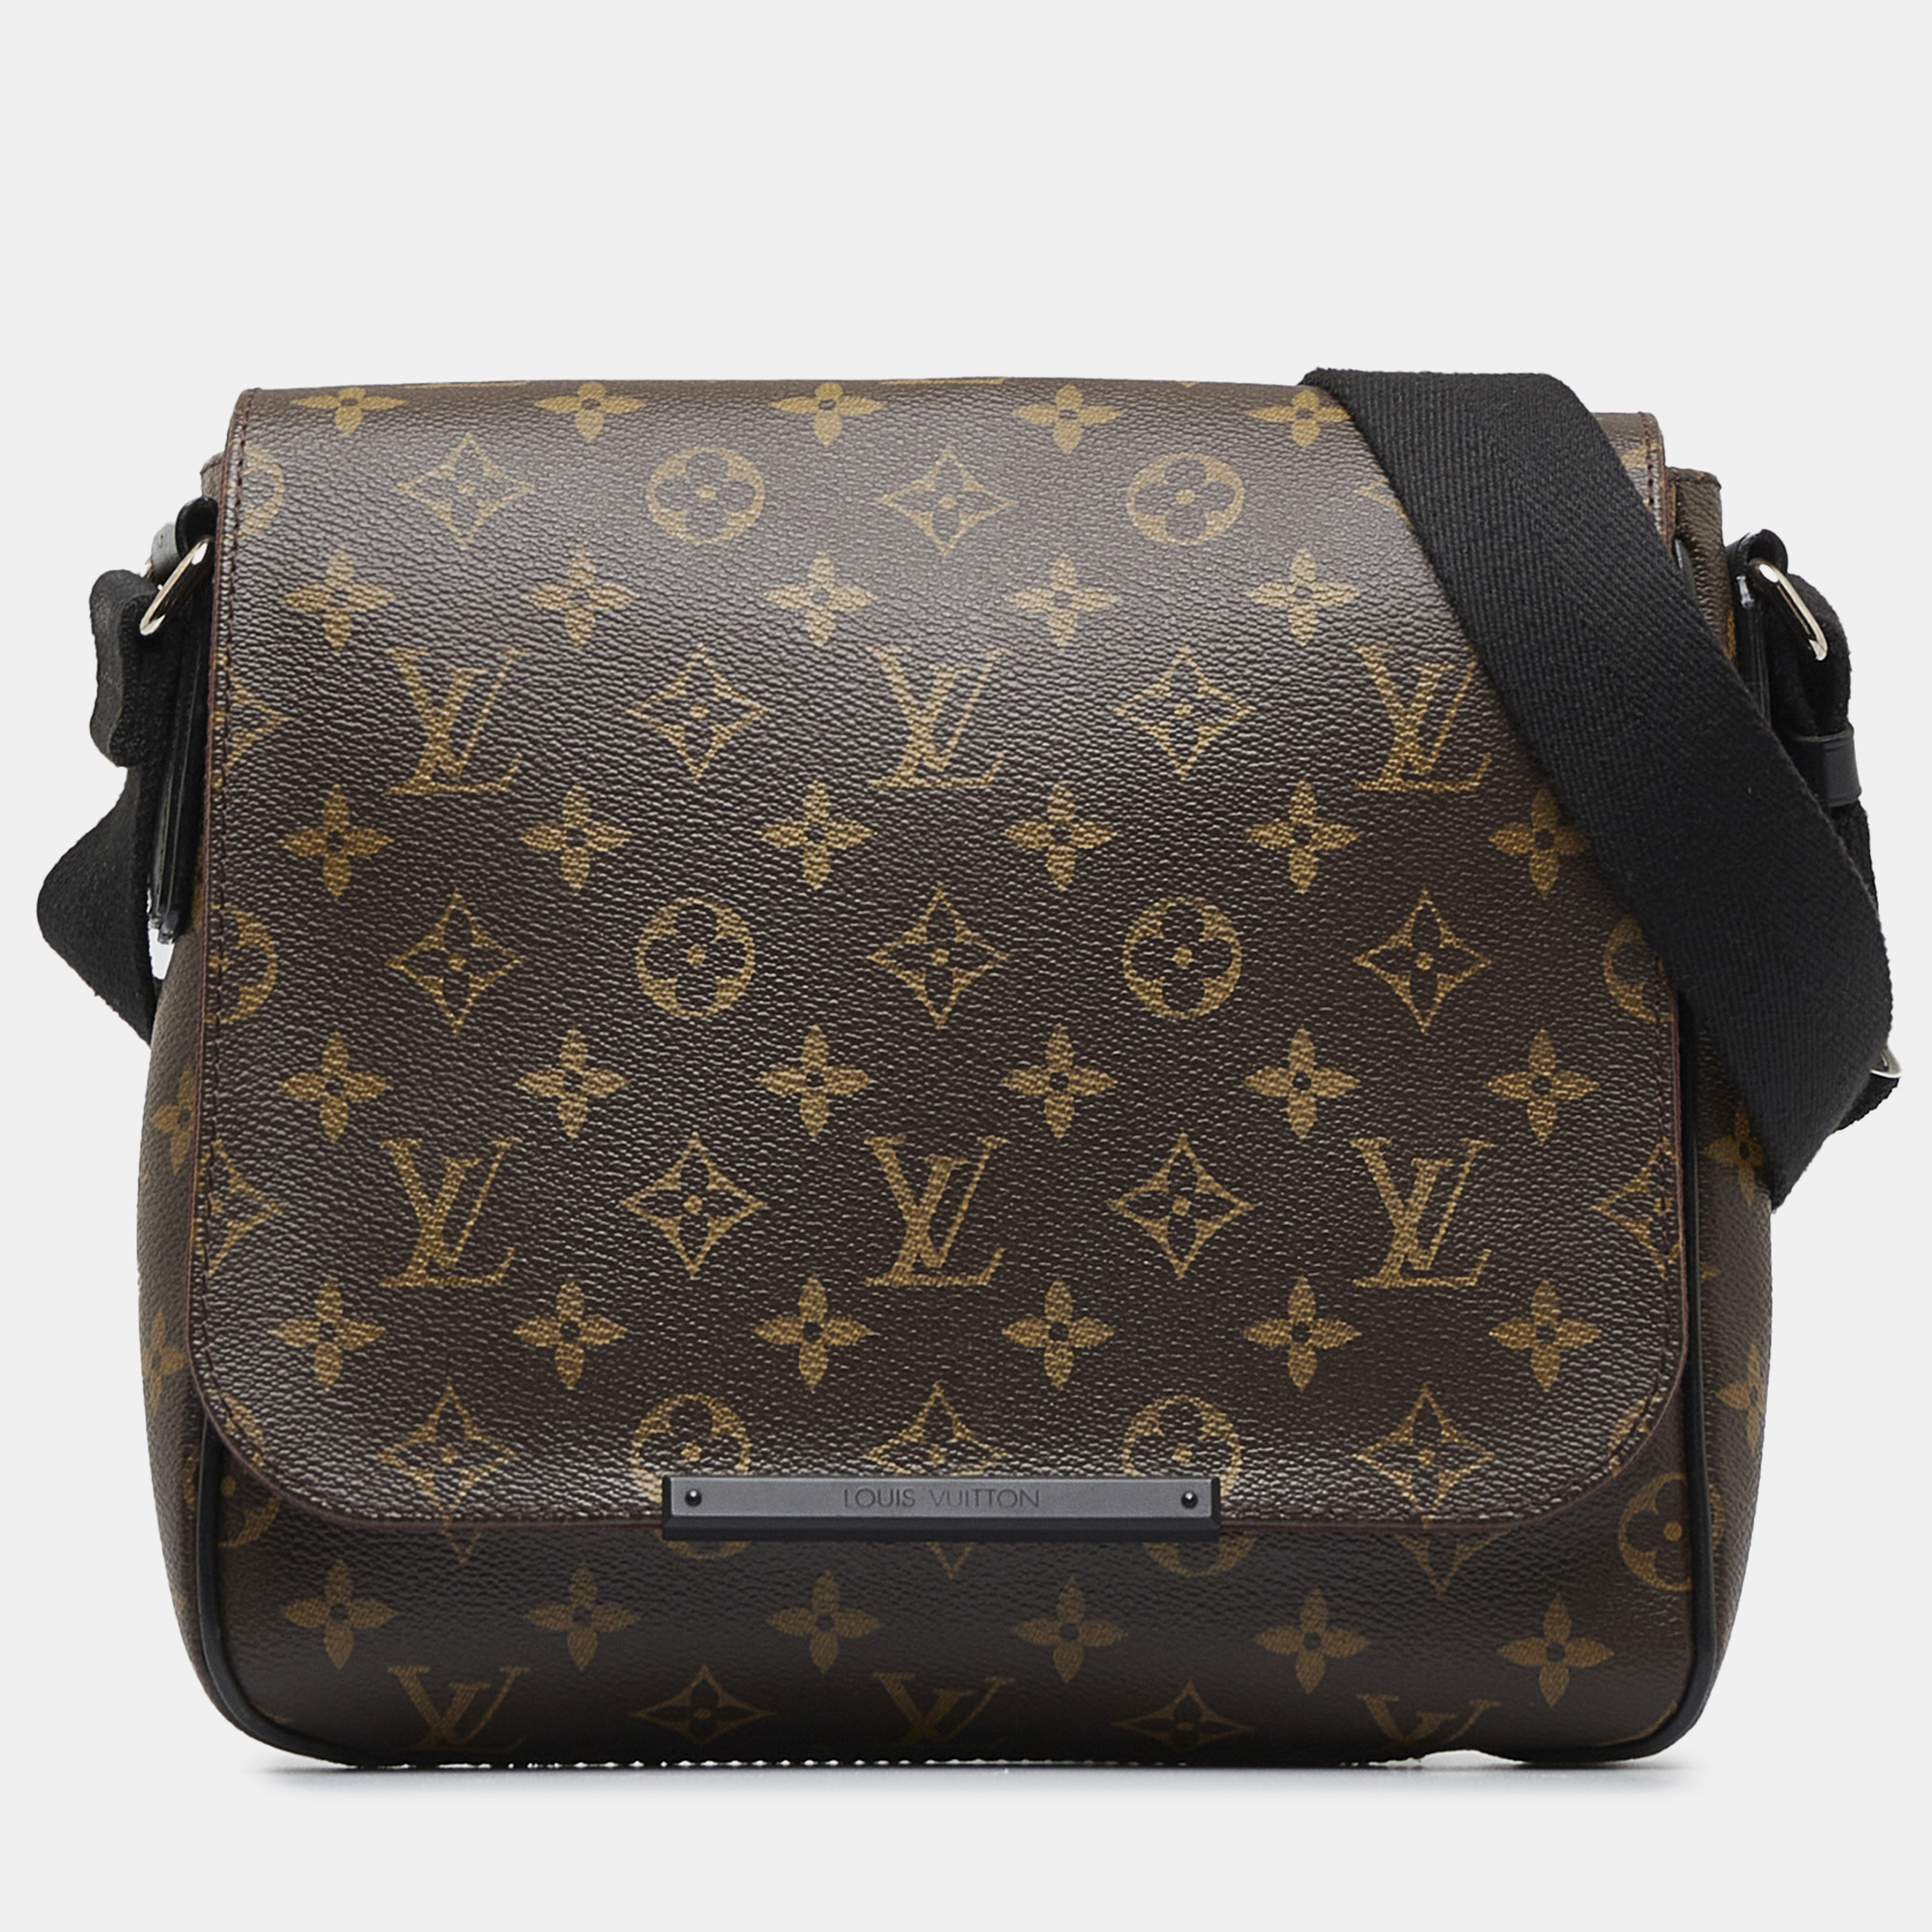 Pre-Owned Louis Vuitton Favorite Monogram PM Crossbody Bag - Good